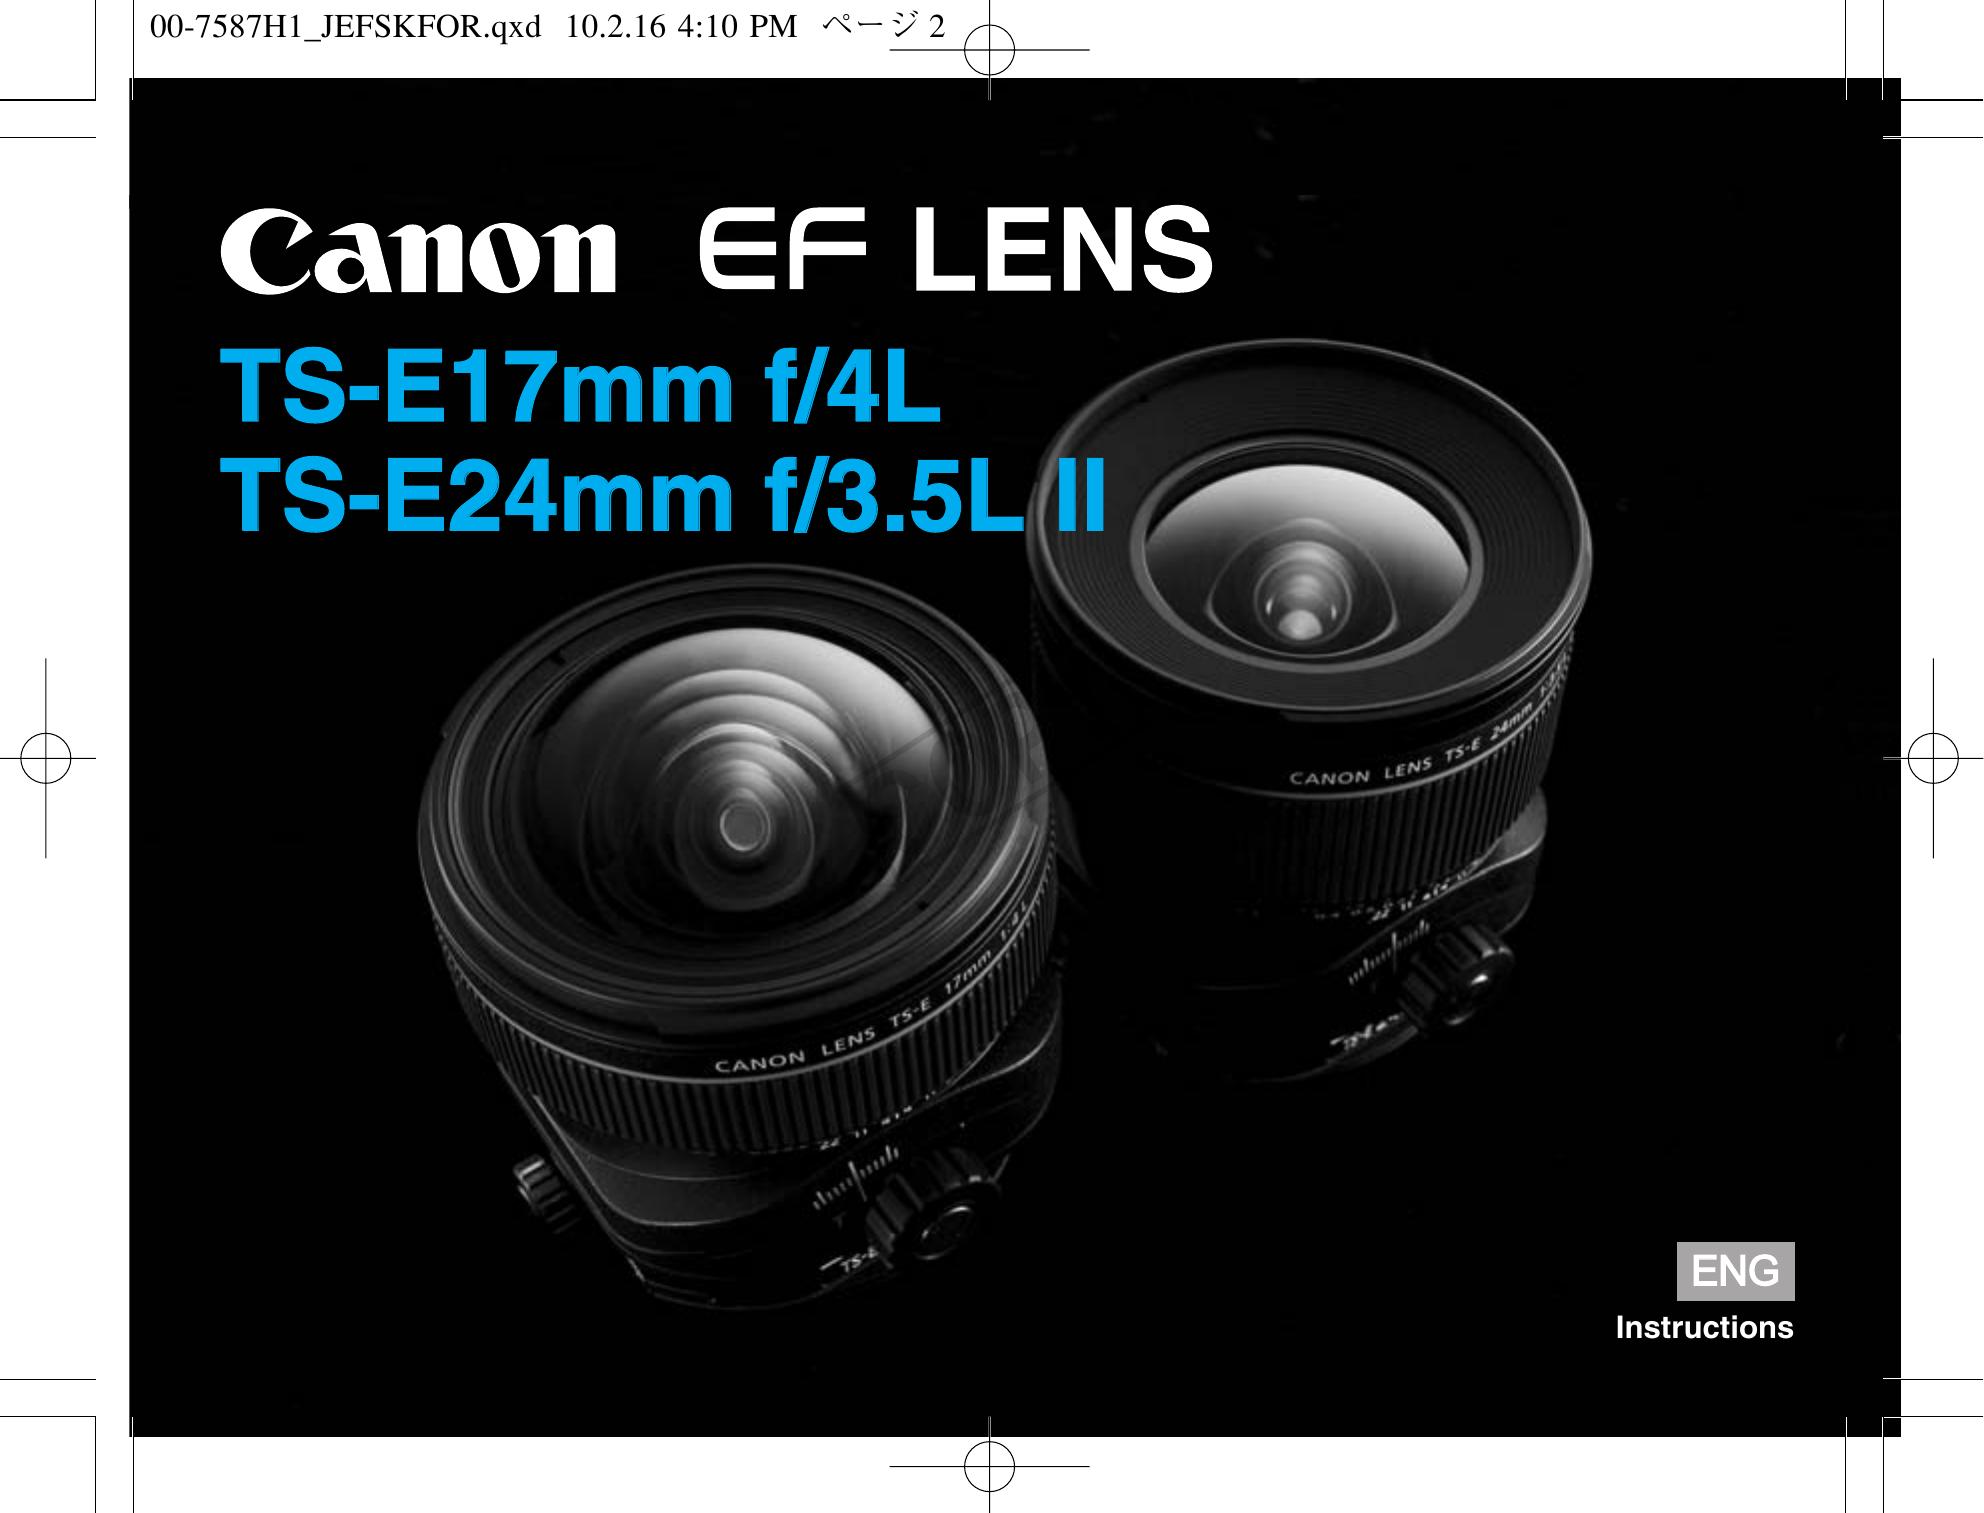 Canon 24mm F/3.5L Camera Lens User Manual